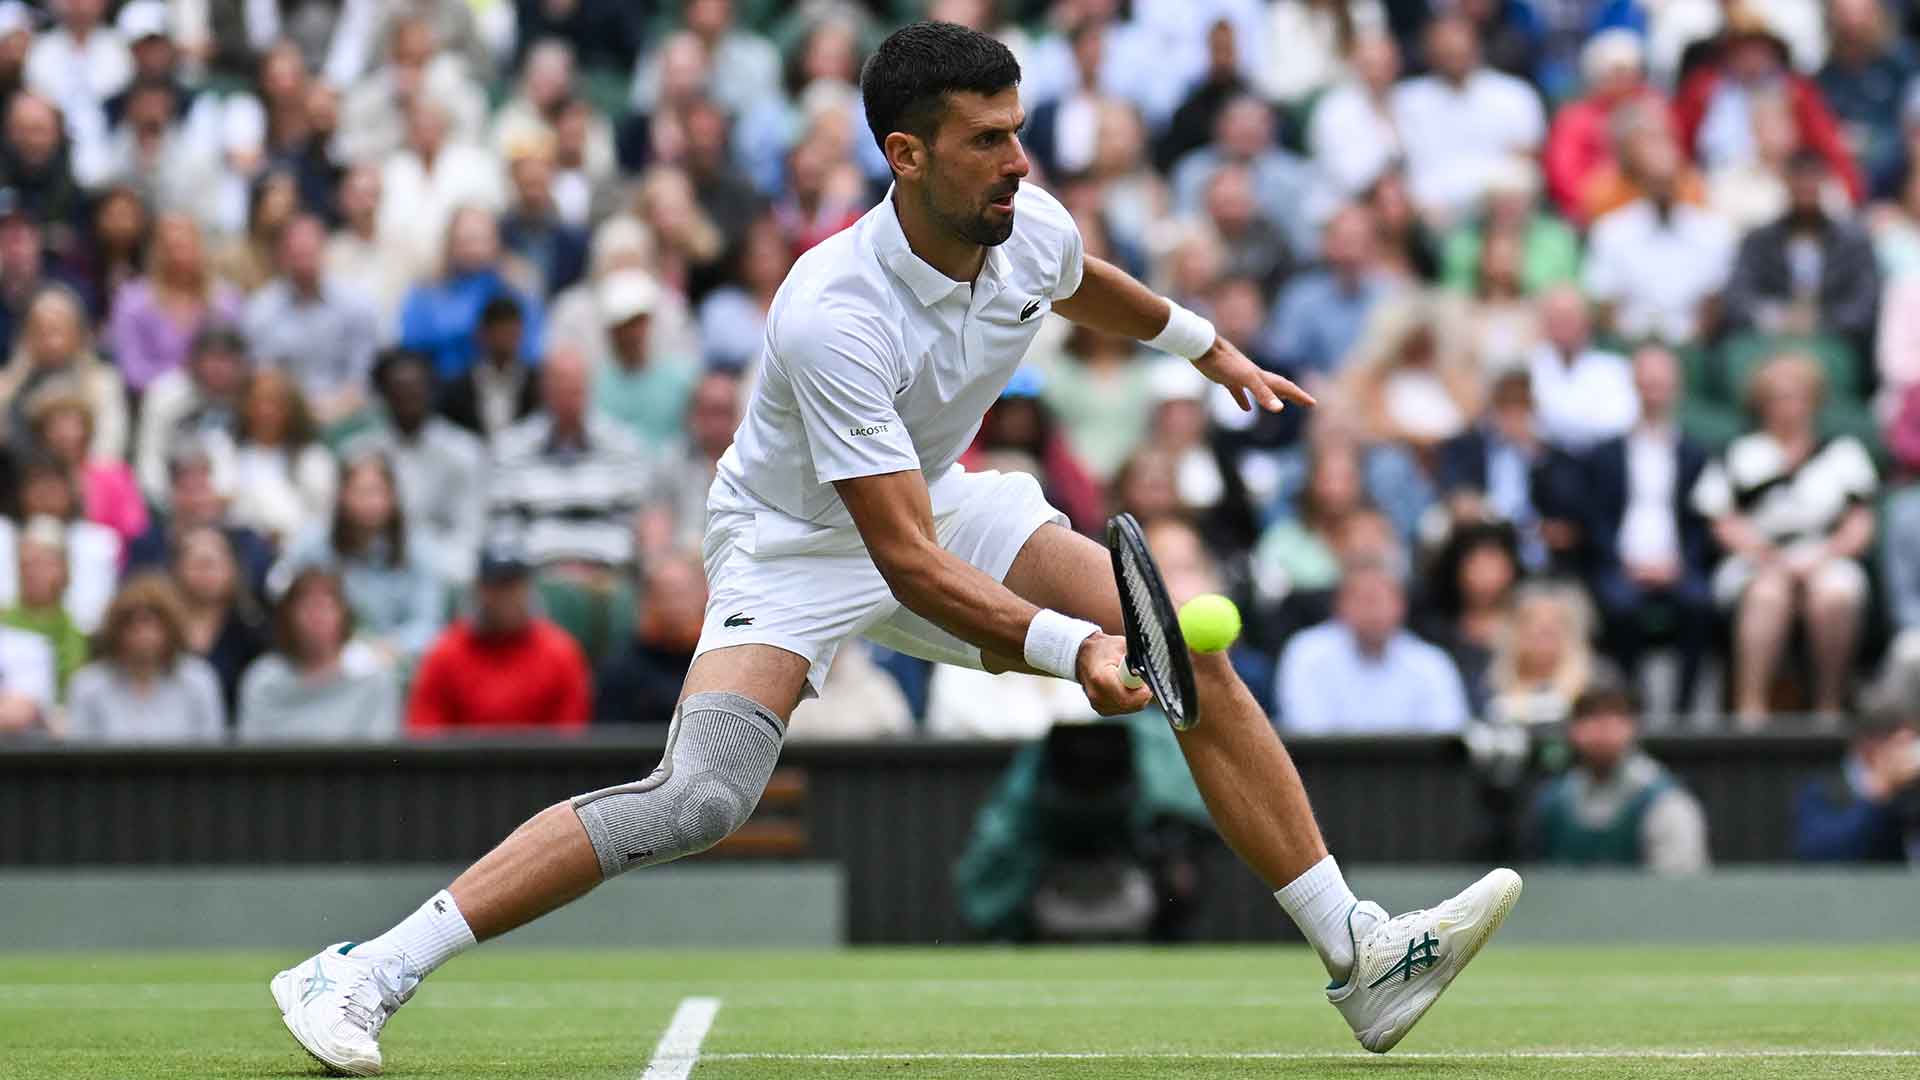 Novak Djokovic will face Carlos Alcaraz in the final on Sunday.